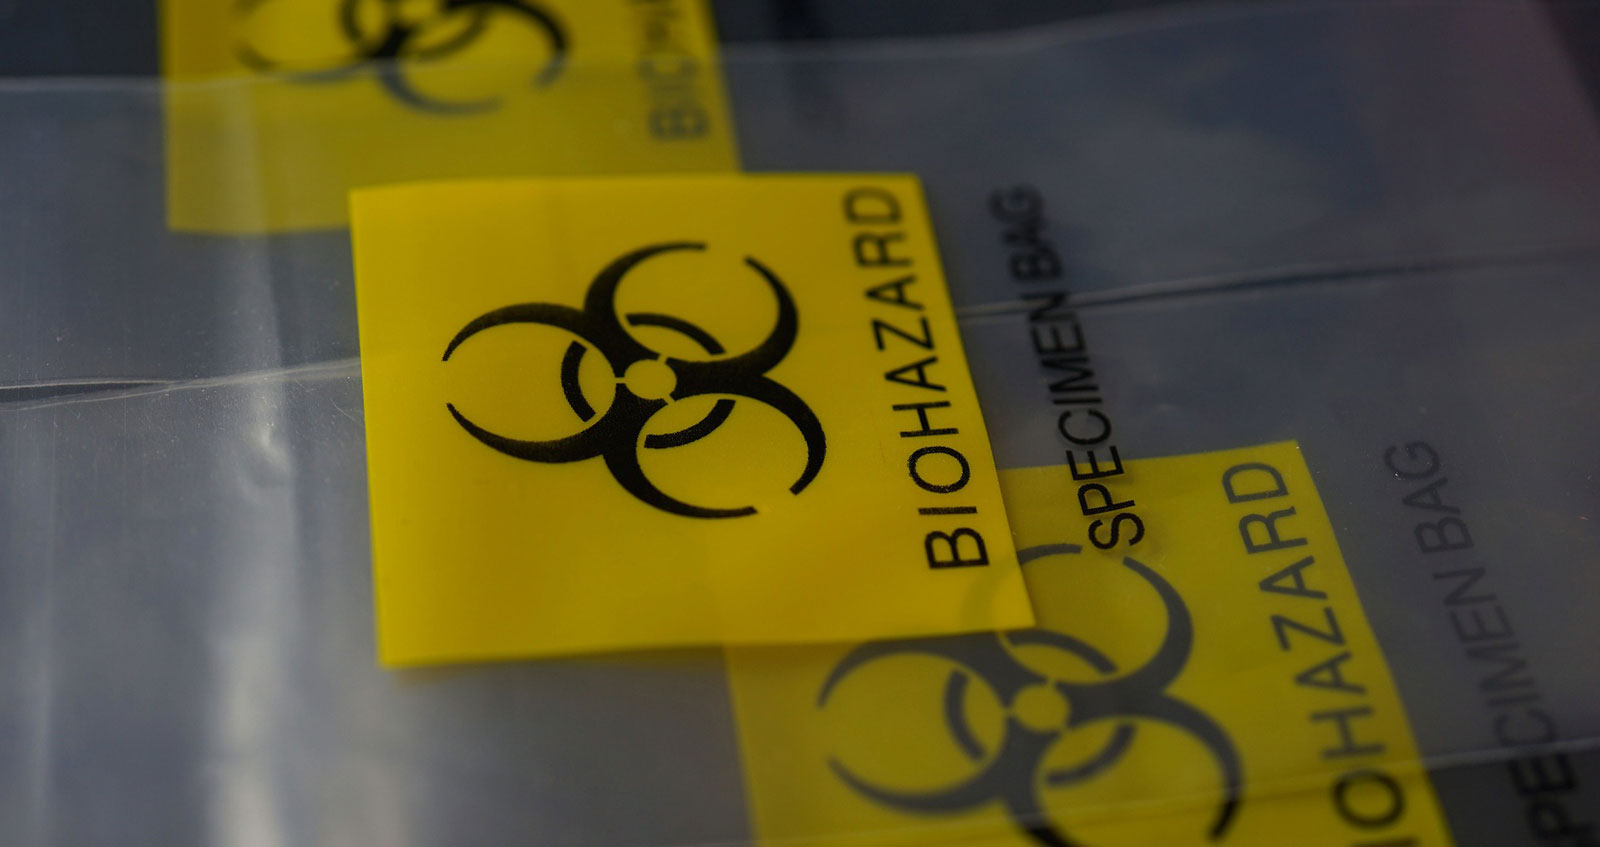 What is biohazard waste?